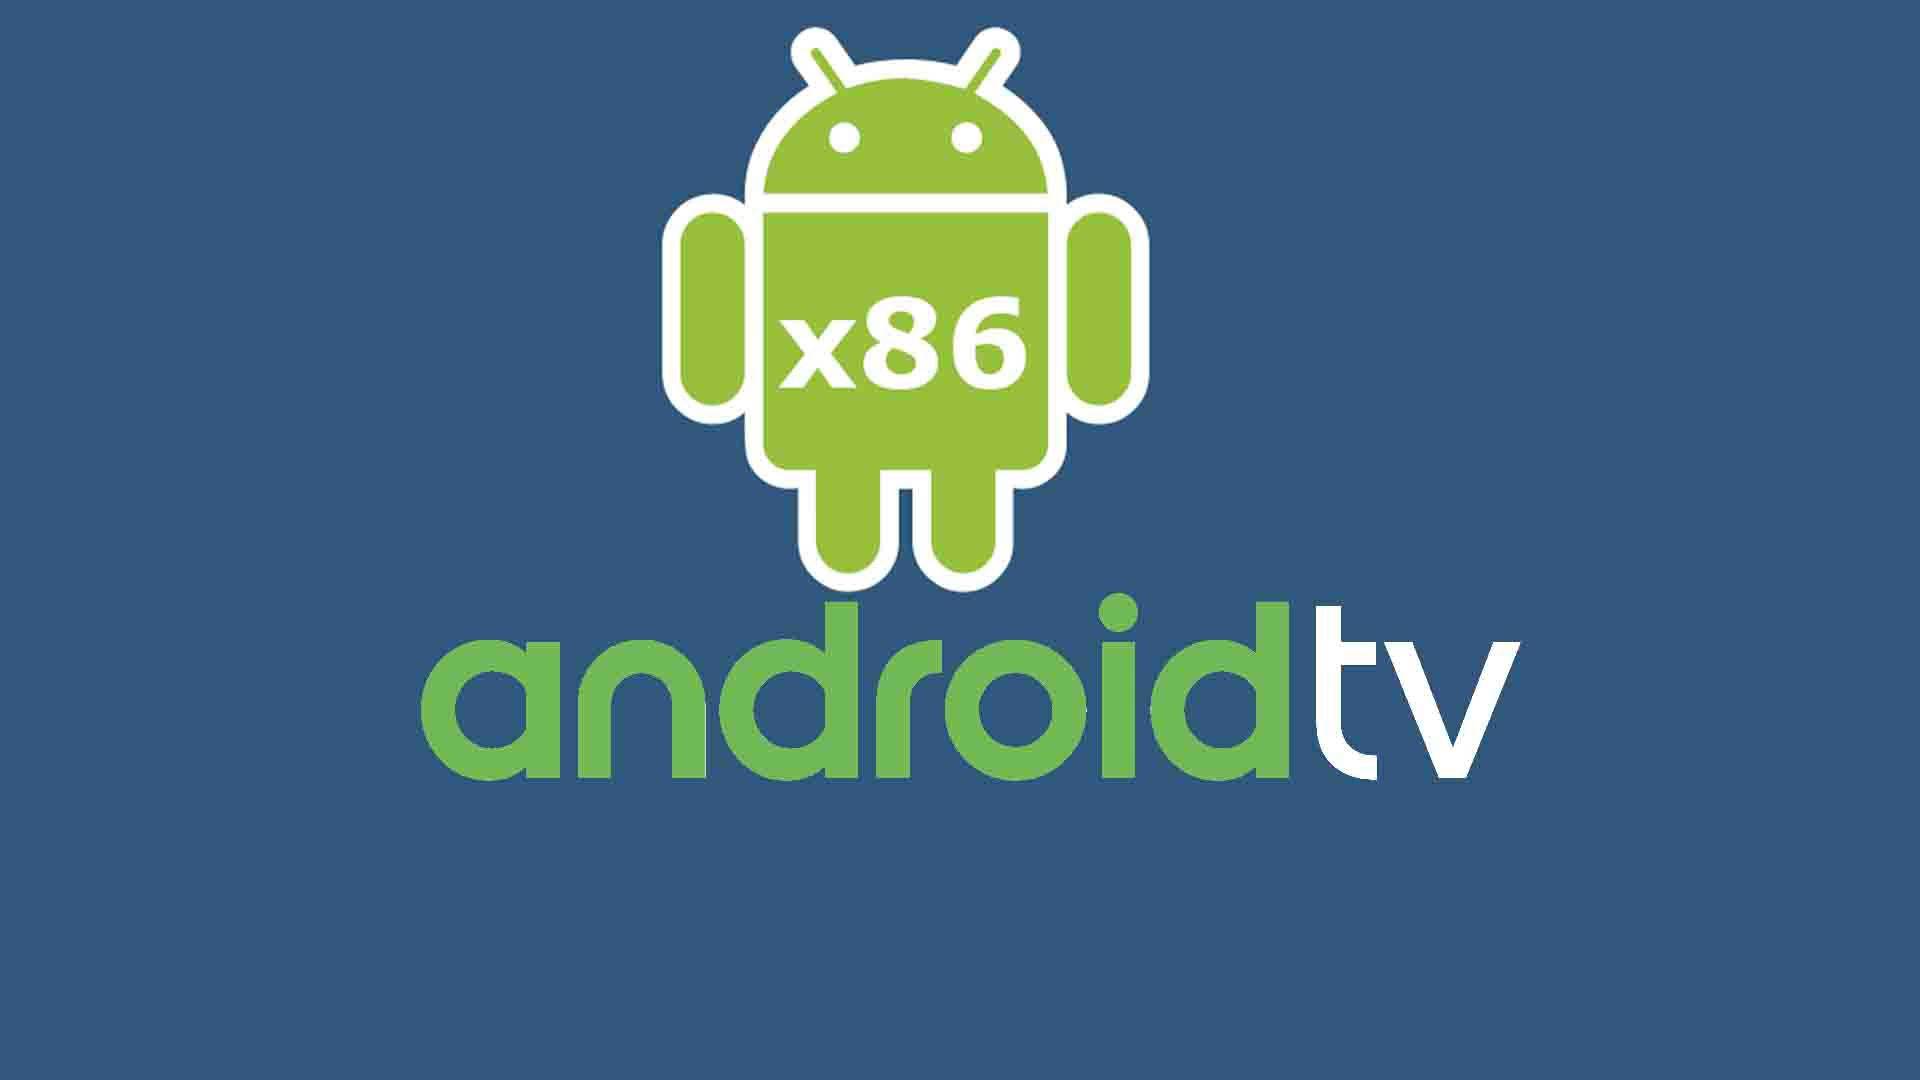 Everything андроид. Андроид 86. Android TV x86. Android TV os 9 (pie). Android x86 atv6.